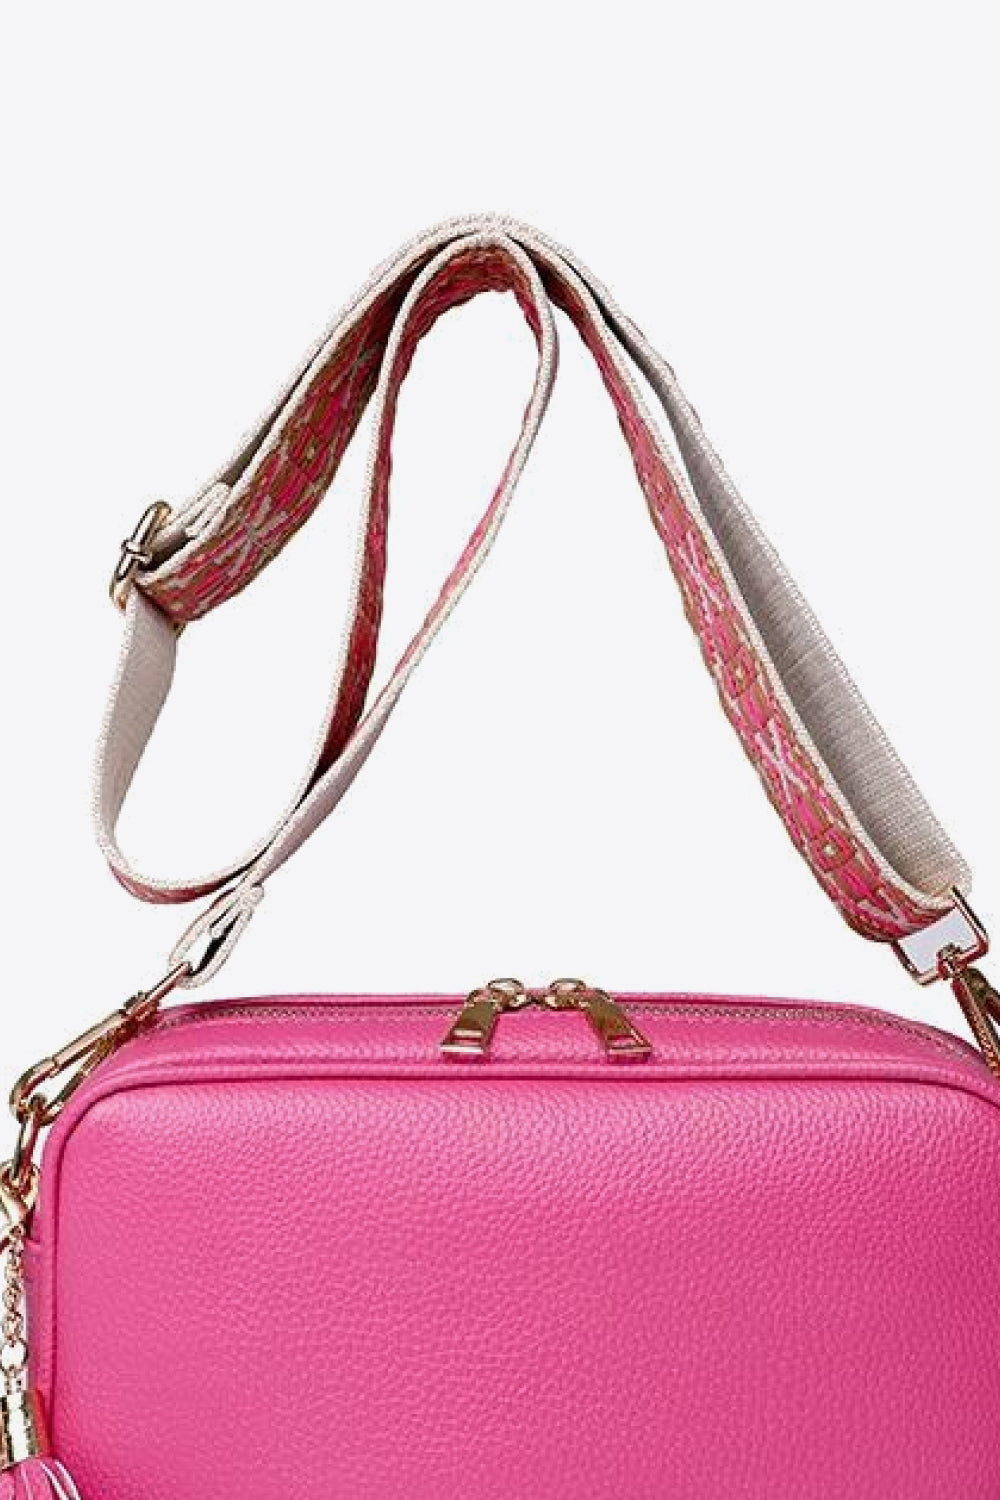 PU Leather Tassel Crossbody Bag - The Fashion Unicorn